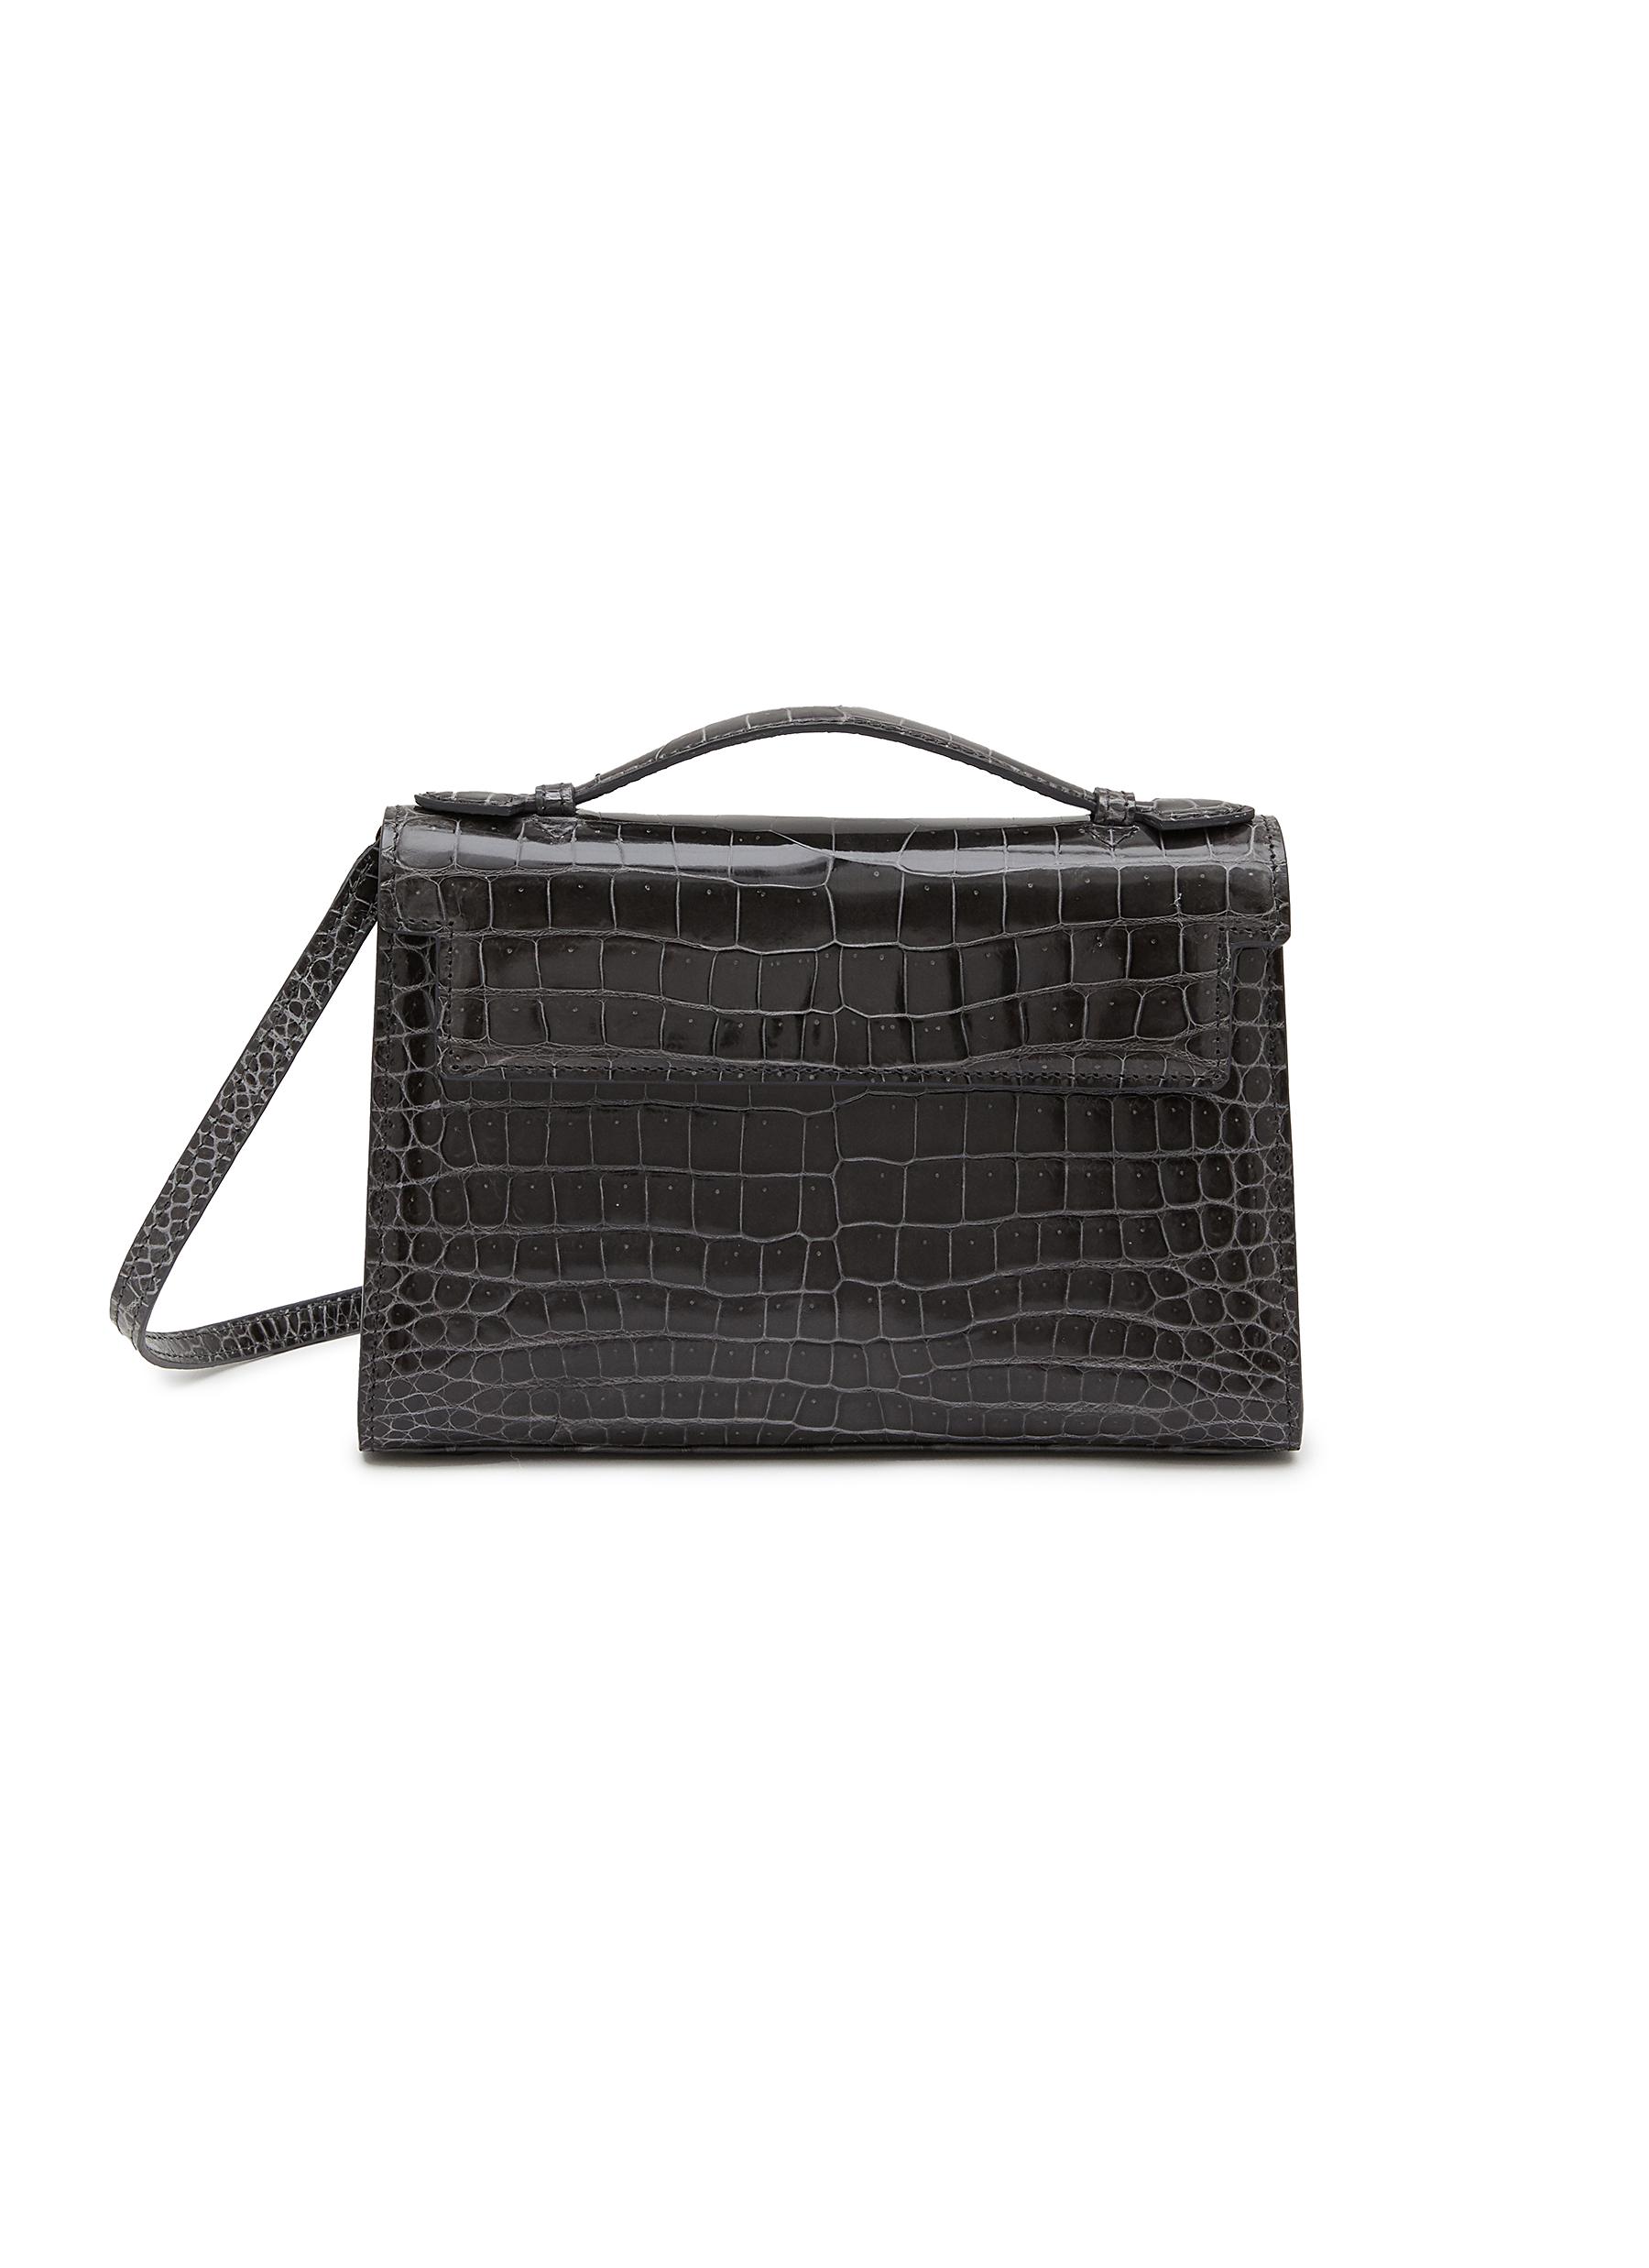 Trendy Crocodile Pattern Handbag, Fashion Faux Leather Shoulder Bag,  Women's Office & Work Purse - Walmart.com